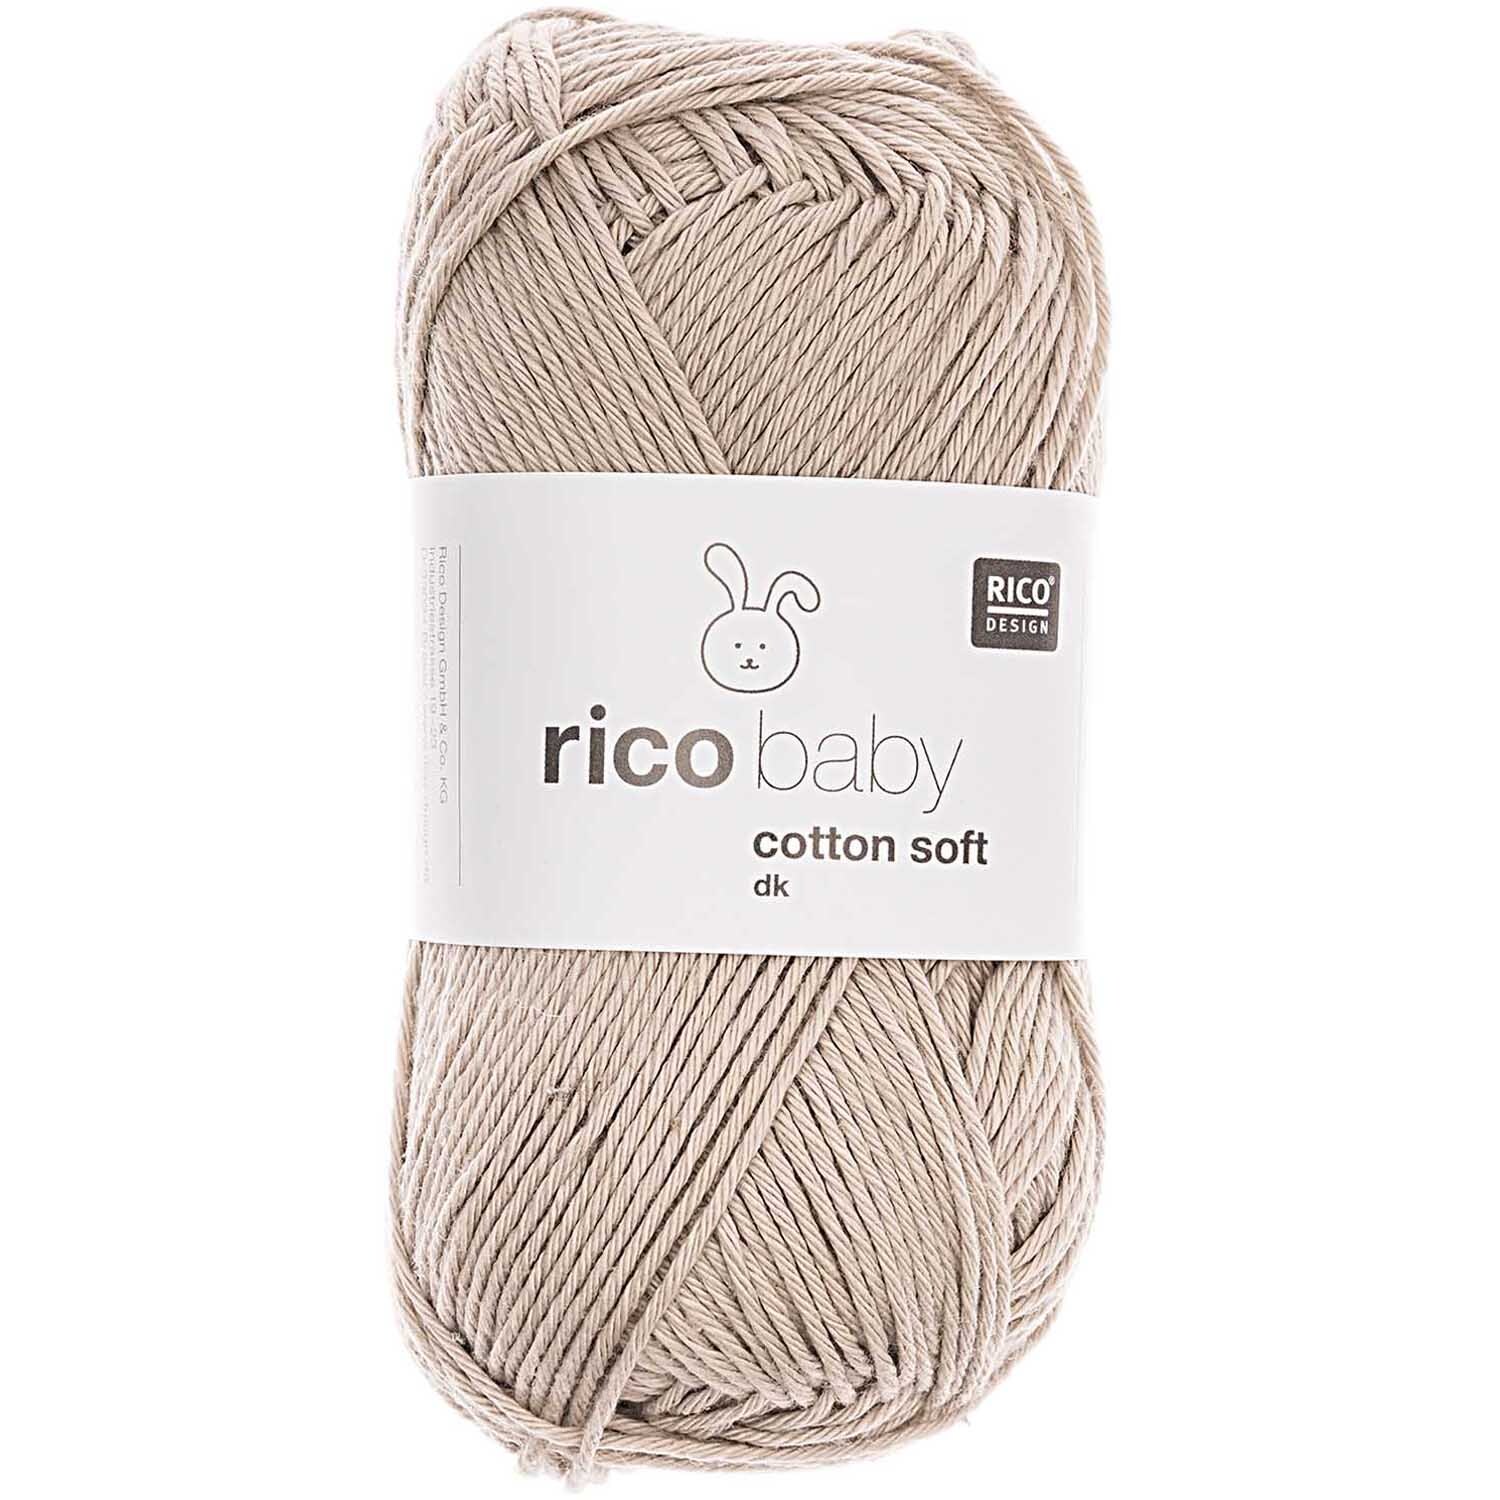 Rico Baby Cotton Soft dk